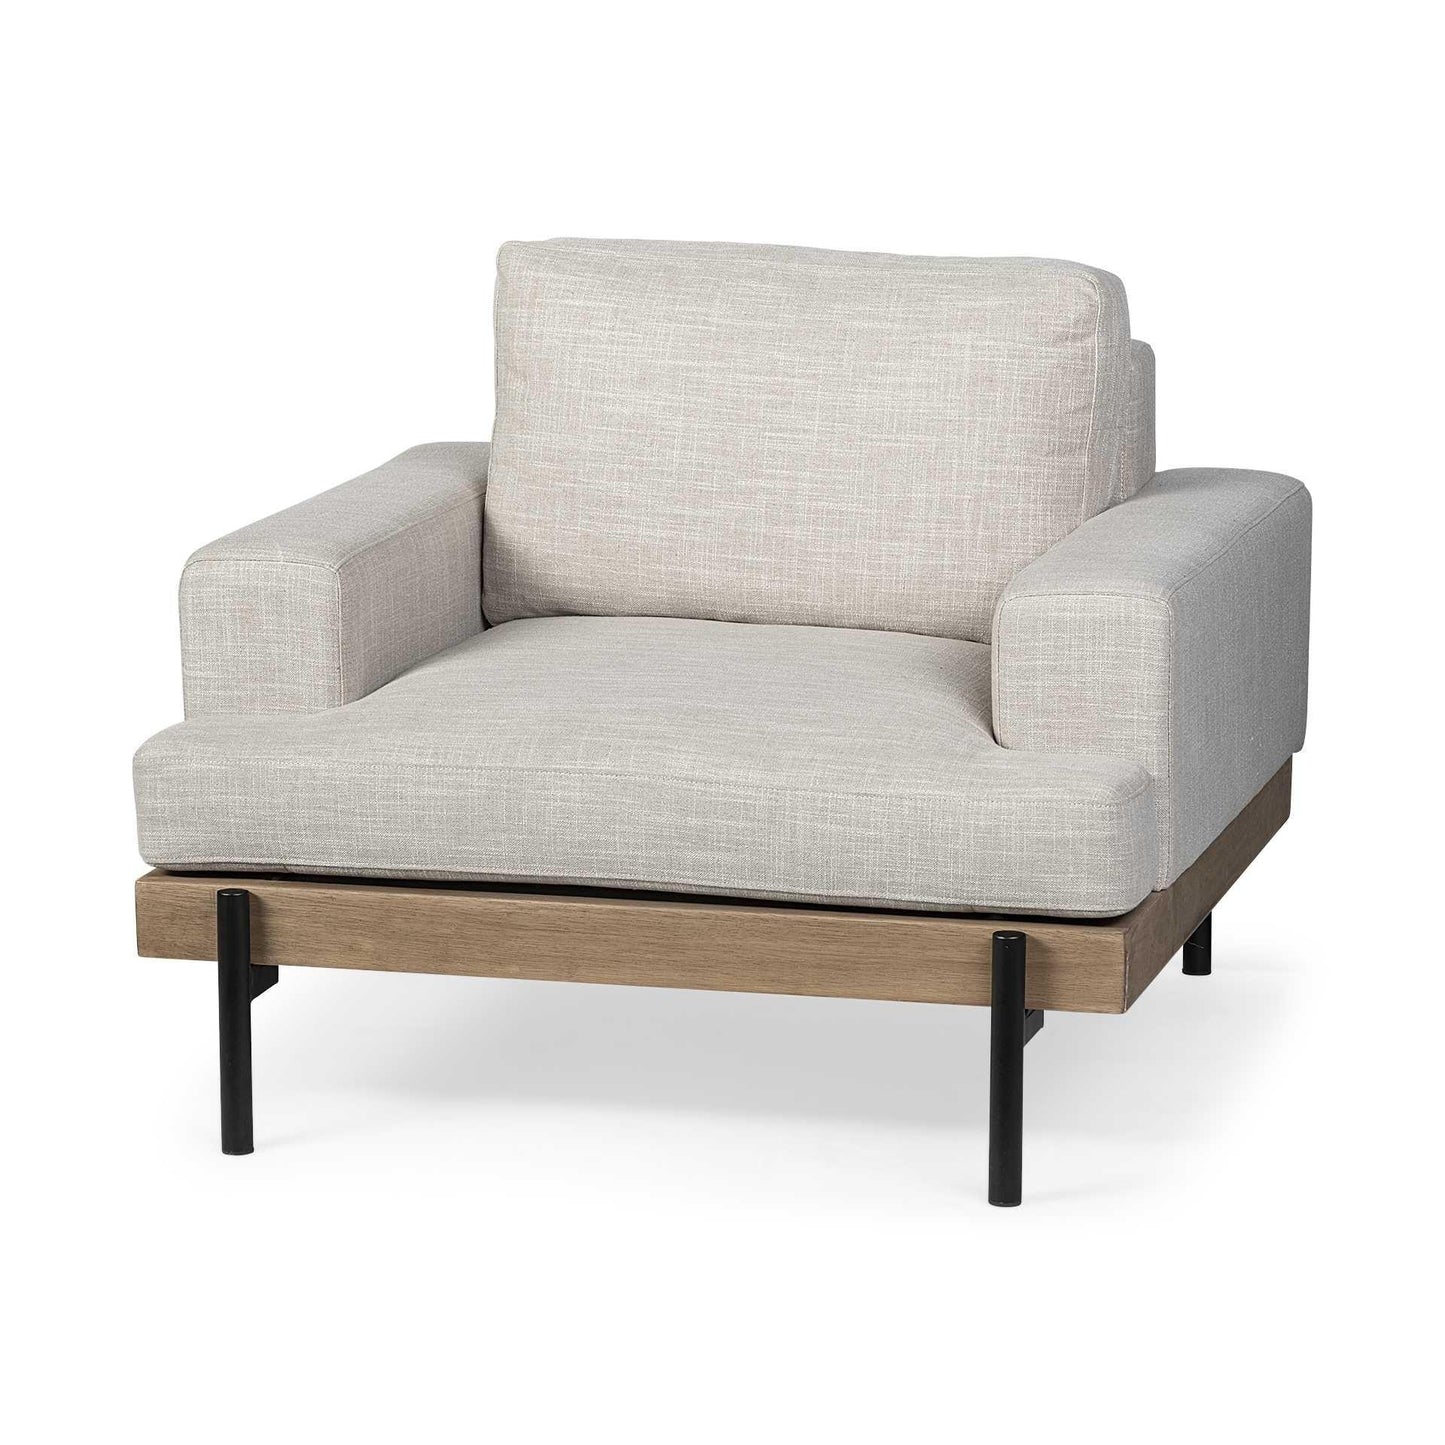 41" Cream And Black Fabric Arm Chair - FurniFindUSA